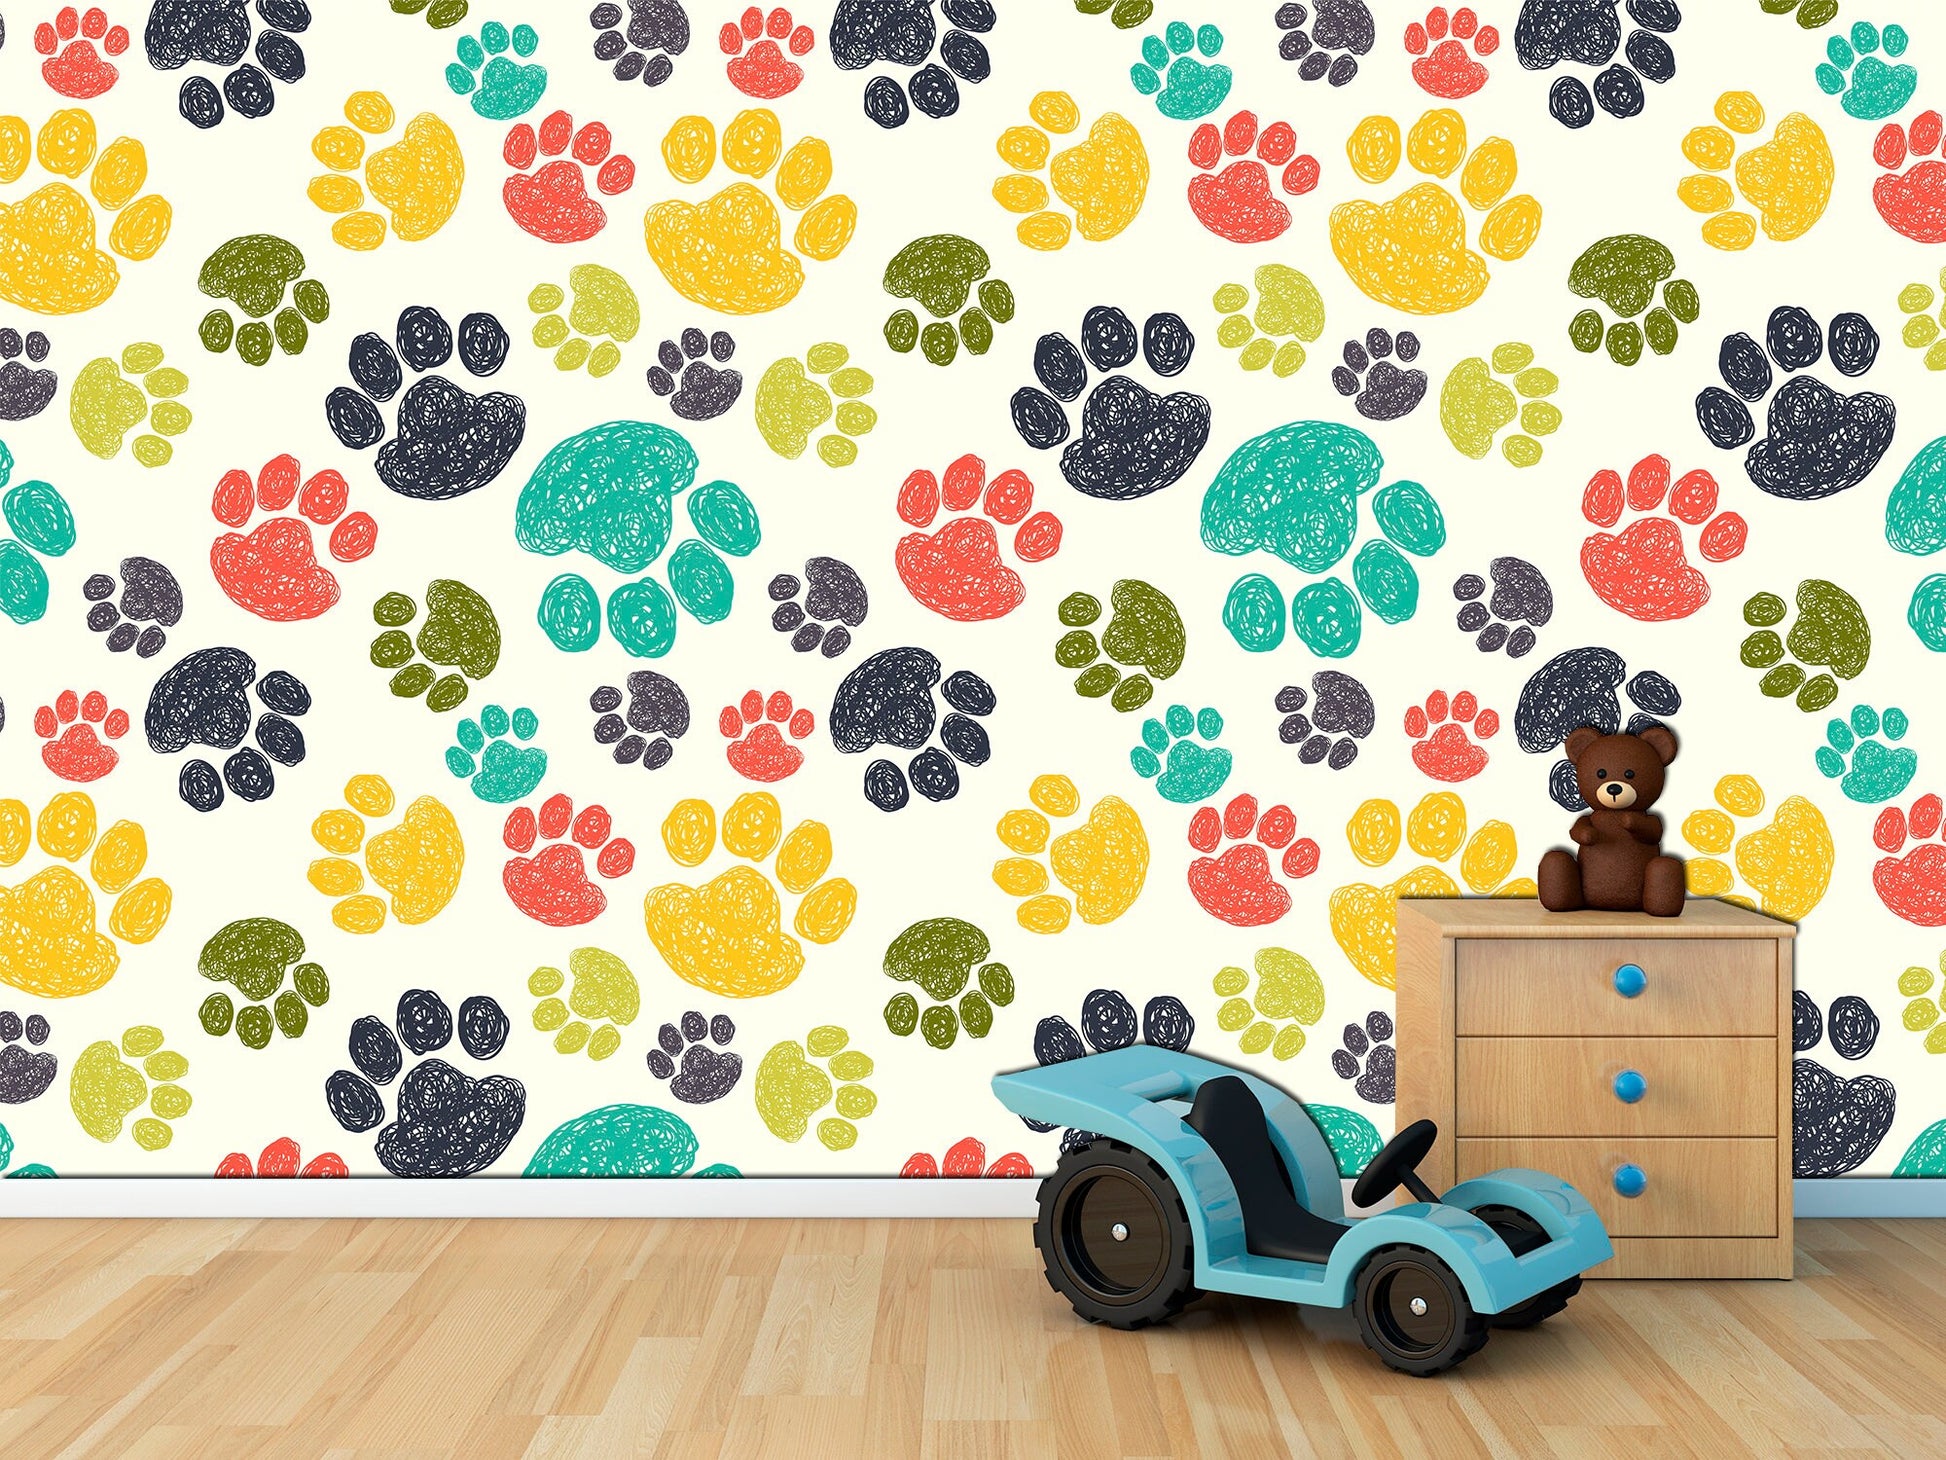 Animal paws decor Art deco wallpaper Animal lover gift, Wallpaper roll Boys room decor Animal wallpaper Nursery wall decor